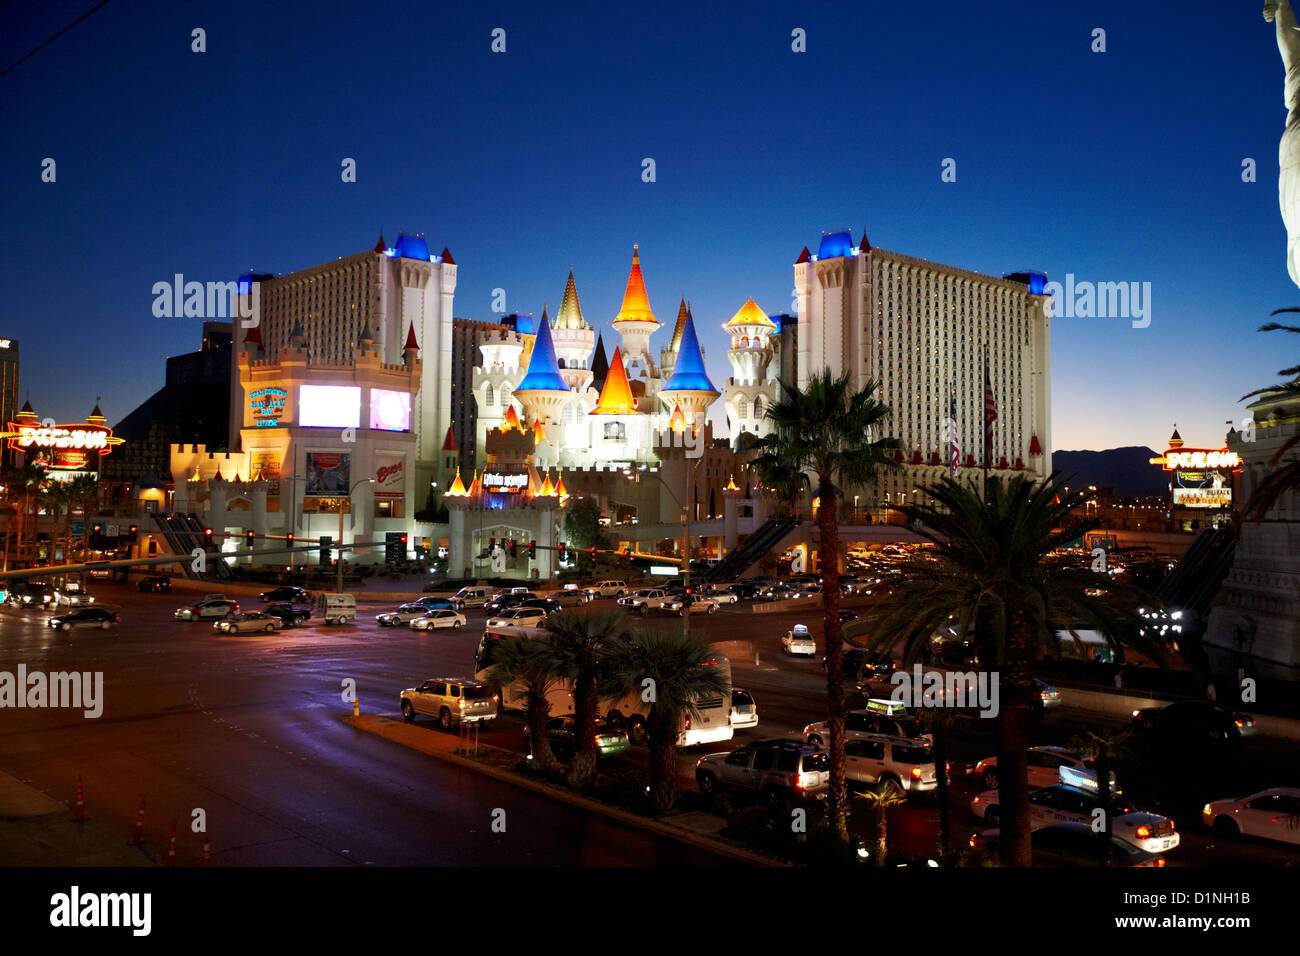 the excalibur resort hotel and casino on Las Vegas boulevard at night Nevada USA Stock Photo